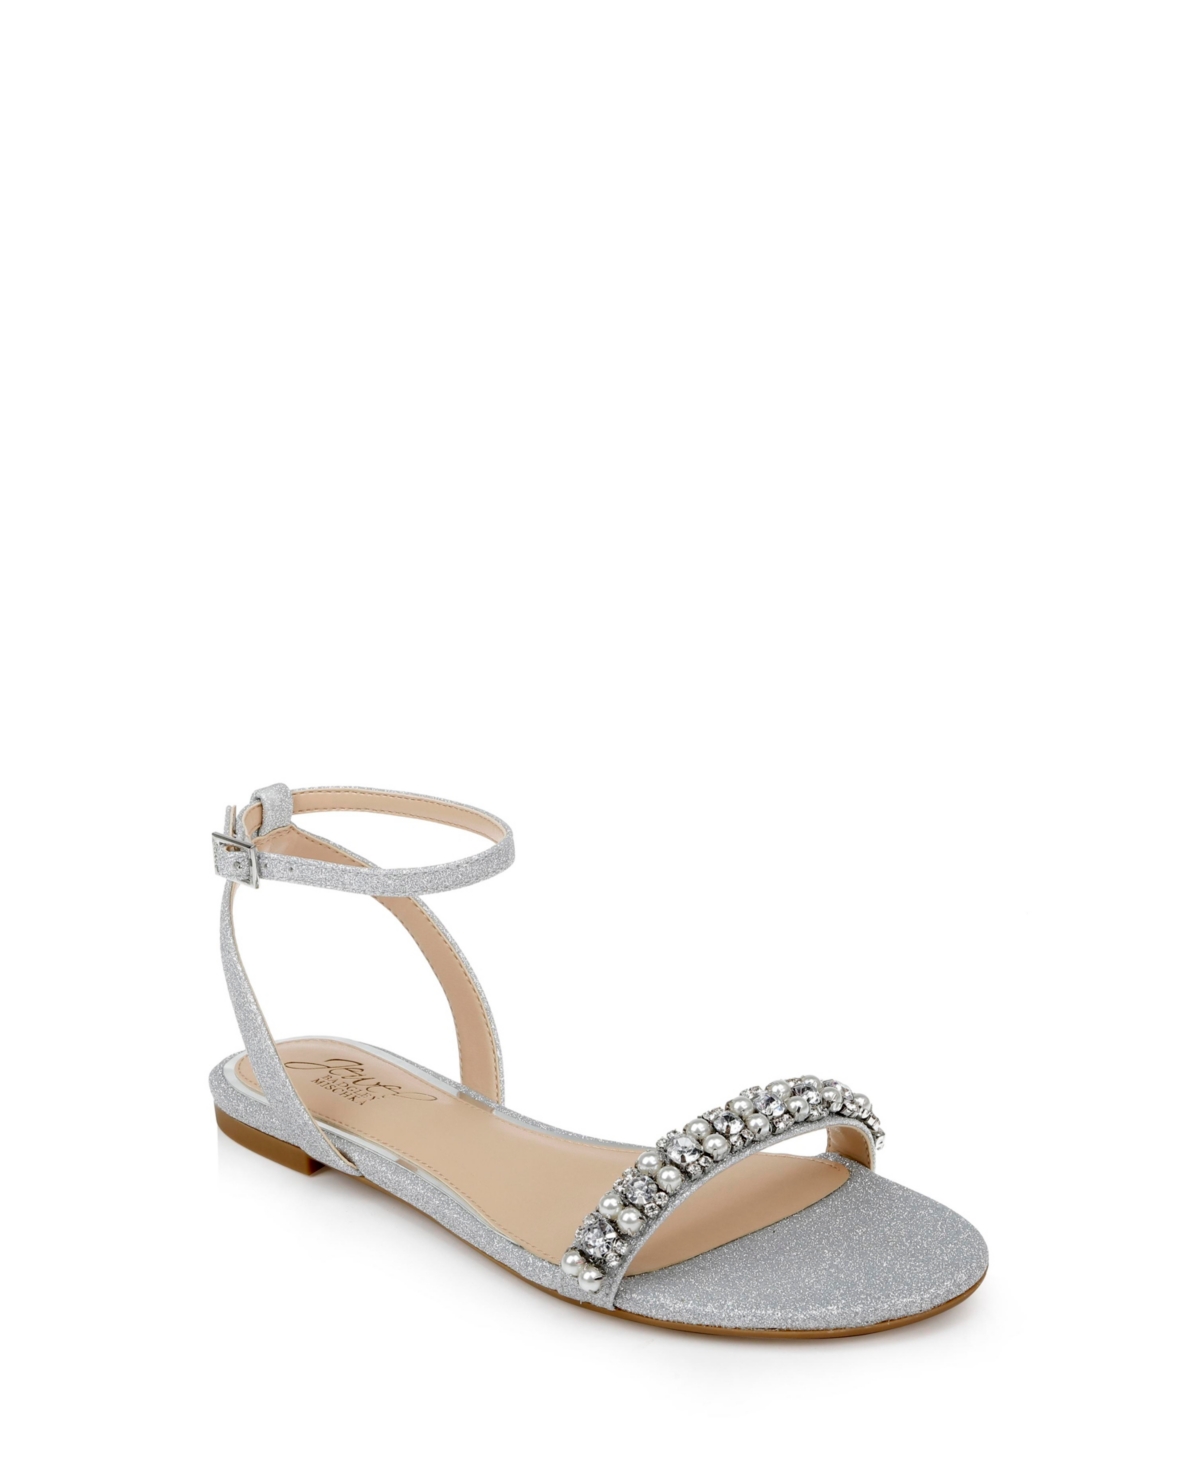 Women's Daria Rhinestone Embellished Evening Flat Sandals - Silver Glitter